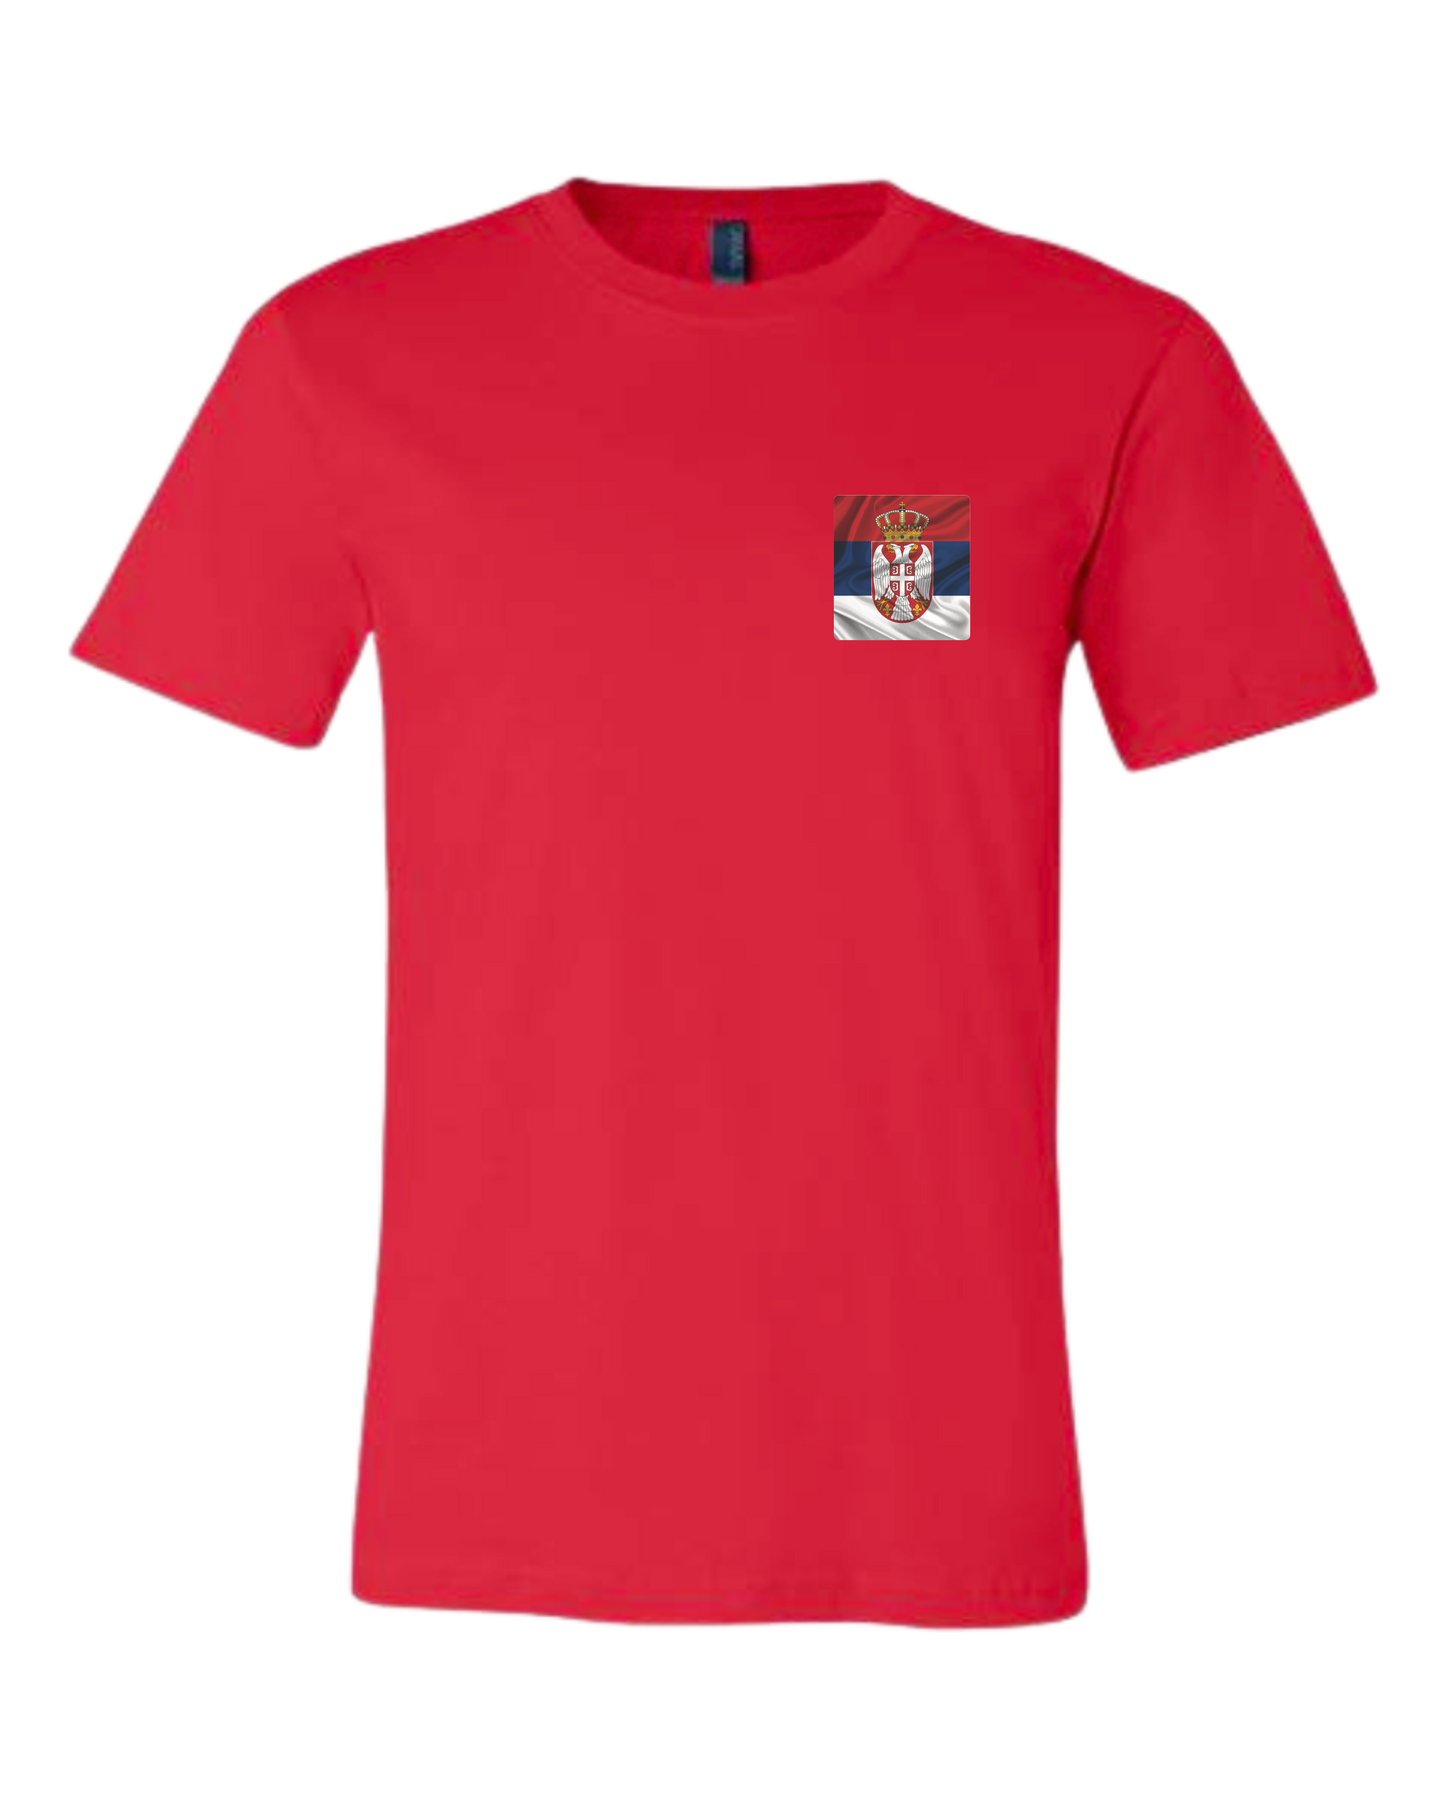 Crvena Majica - Zastava Srbije